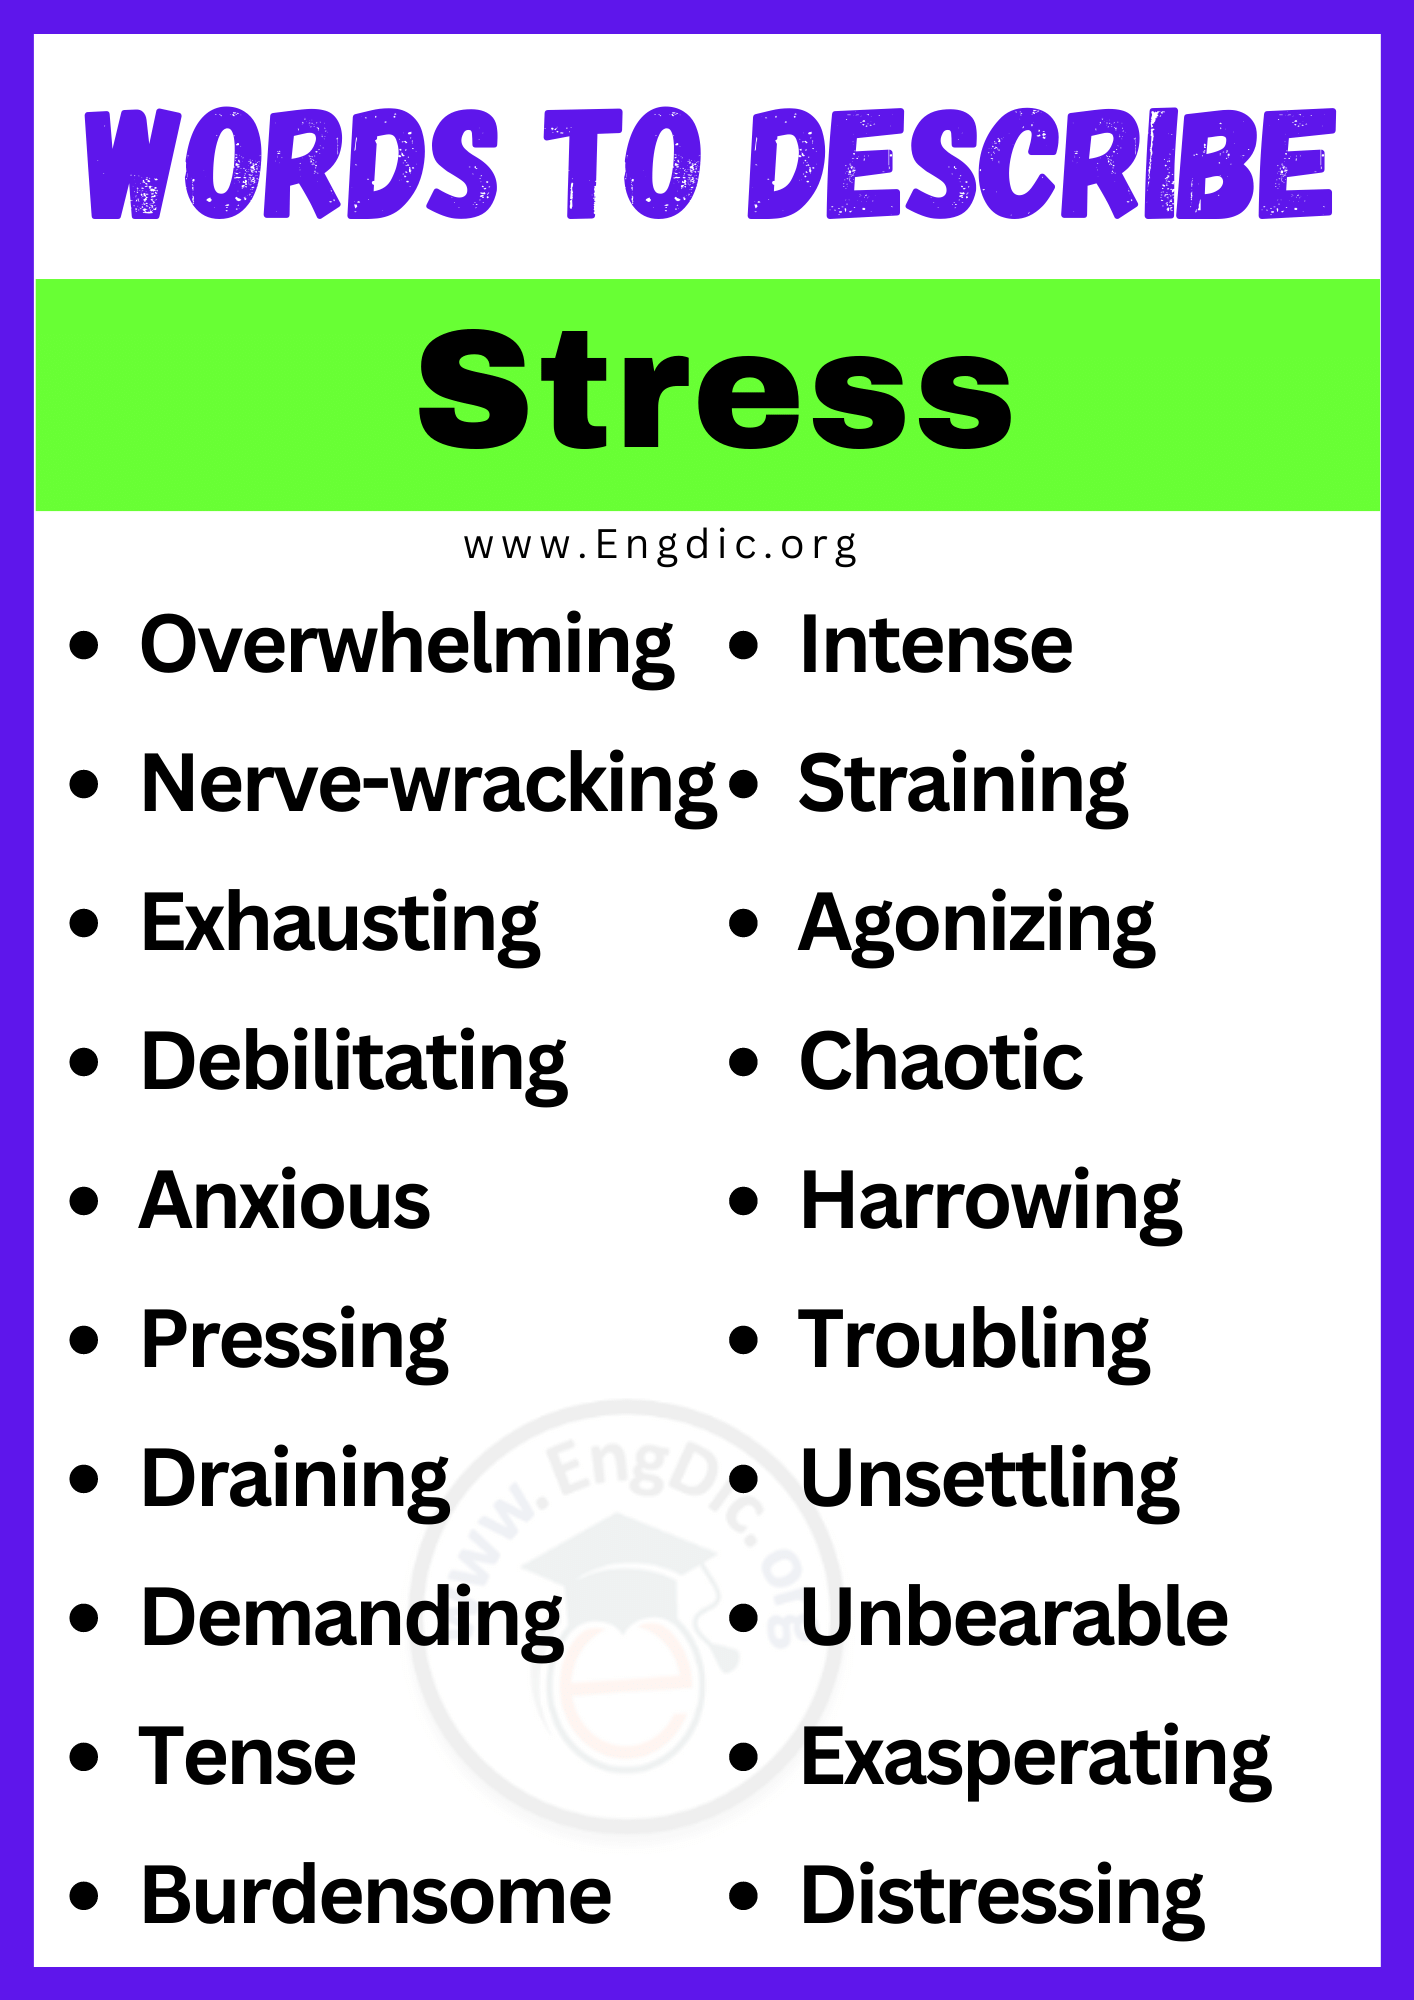 Words to Describe Stress